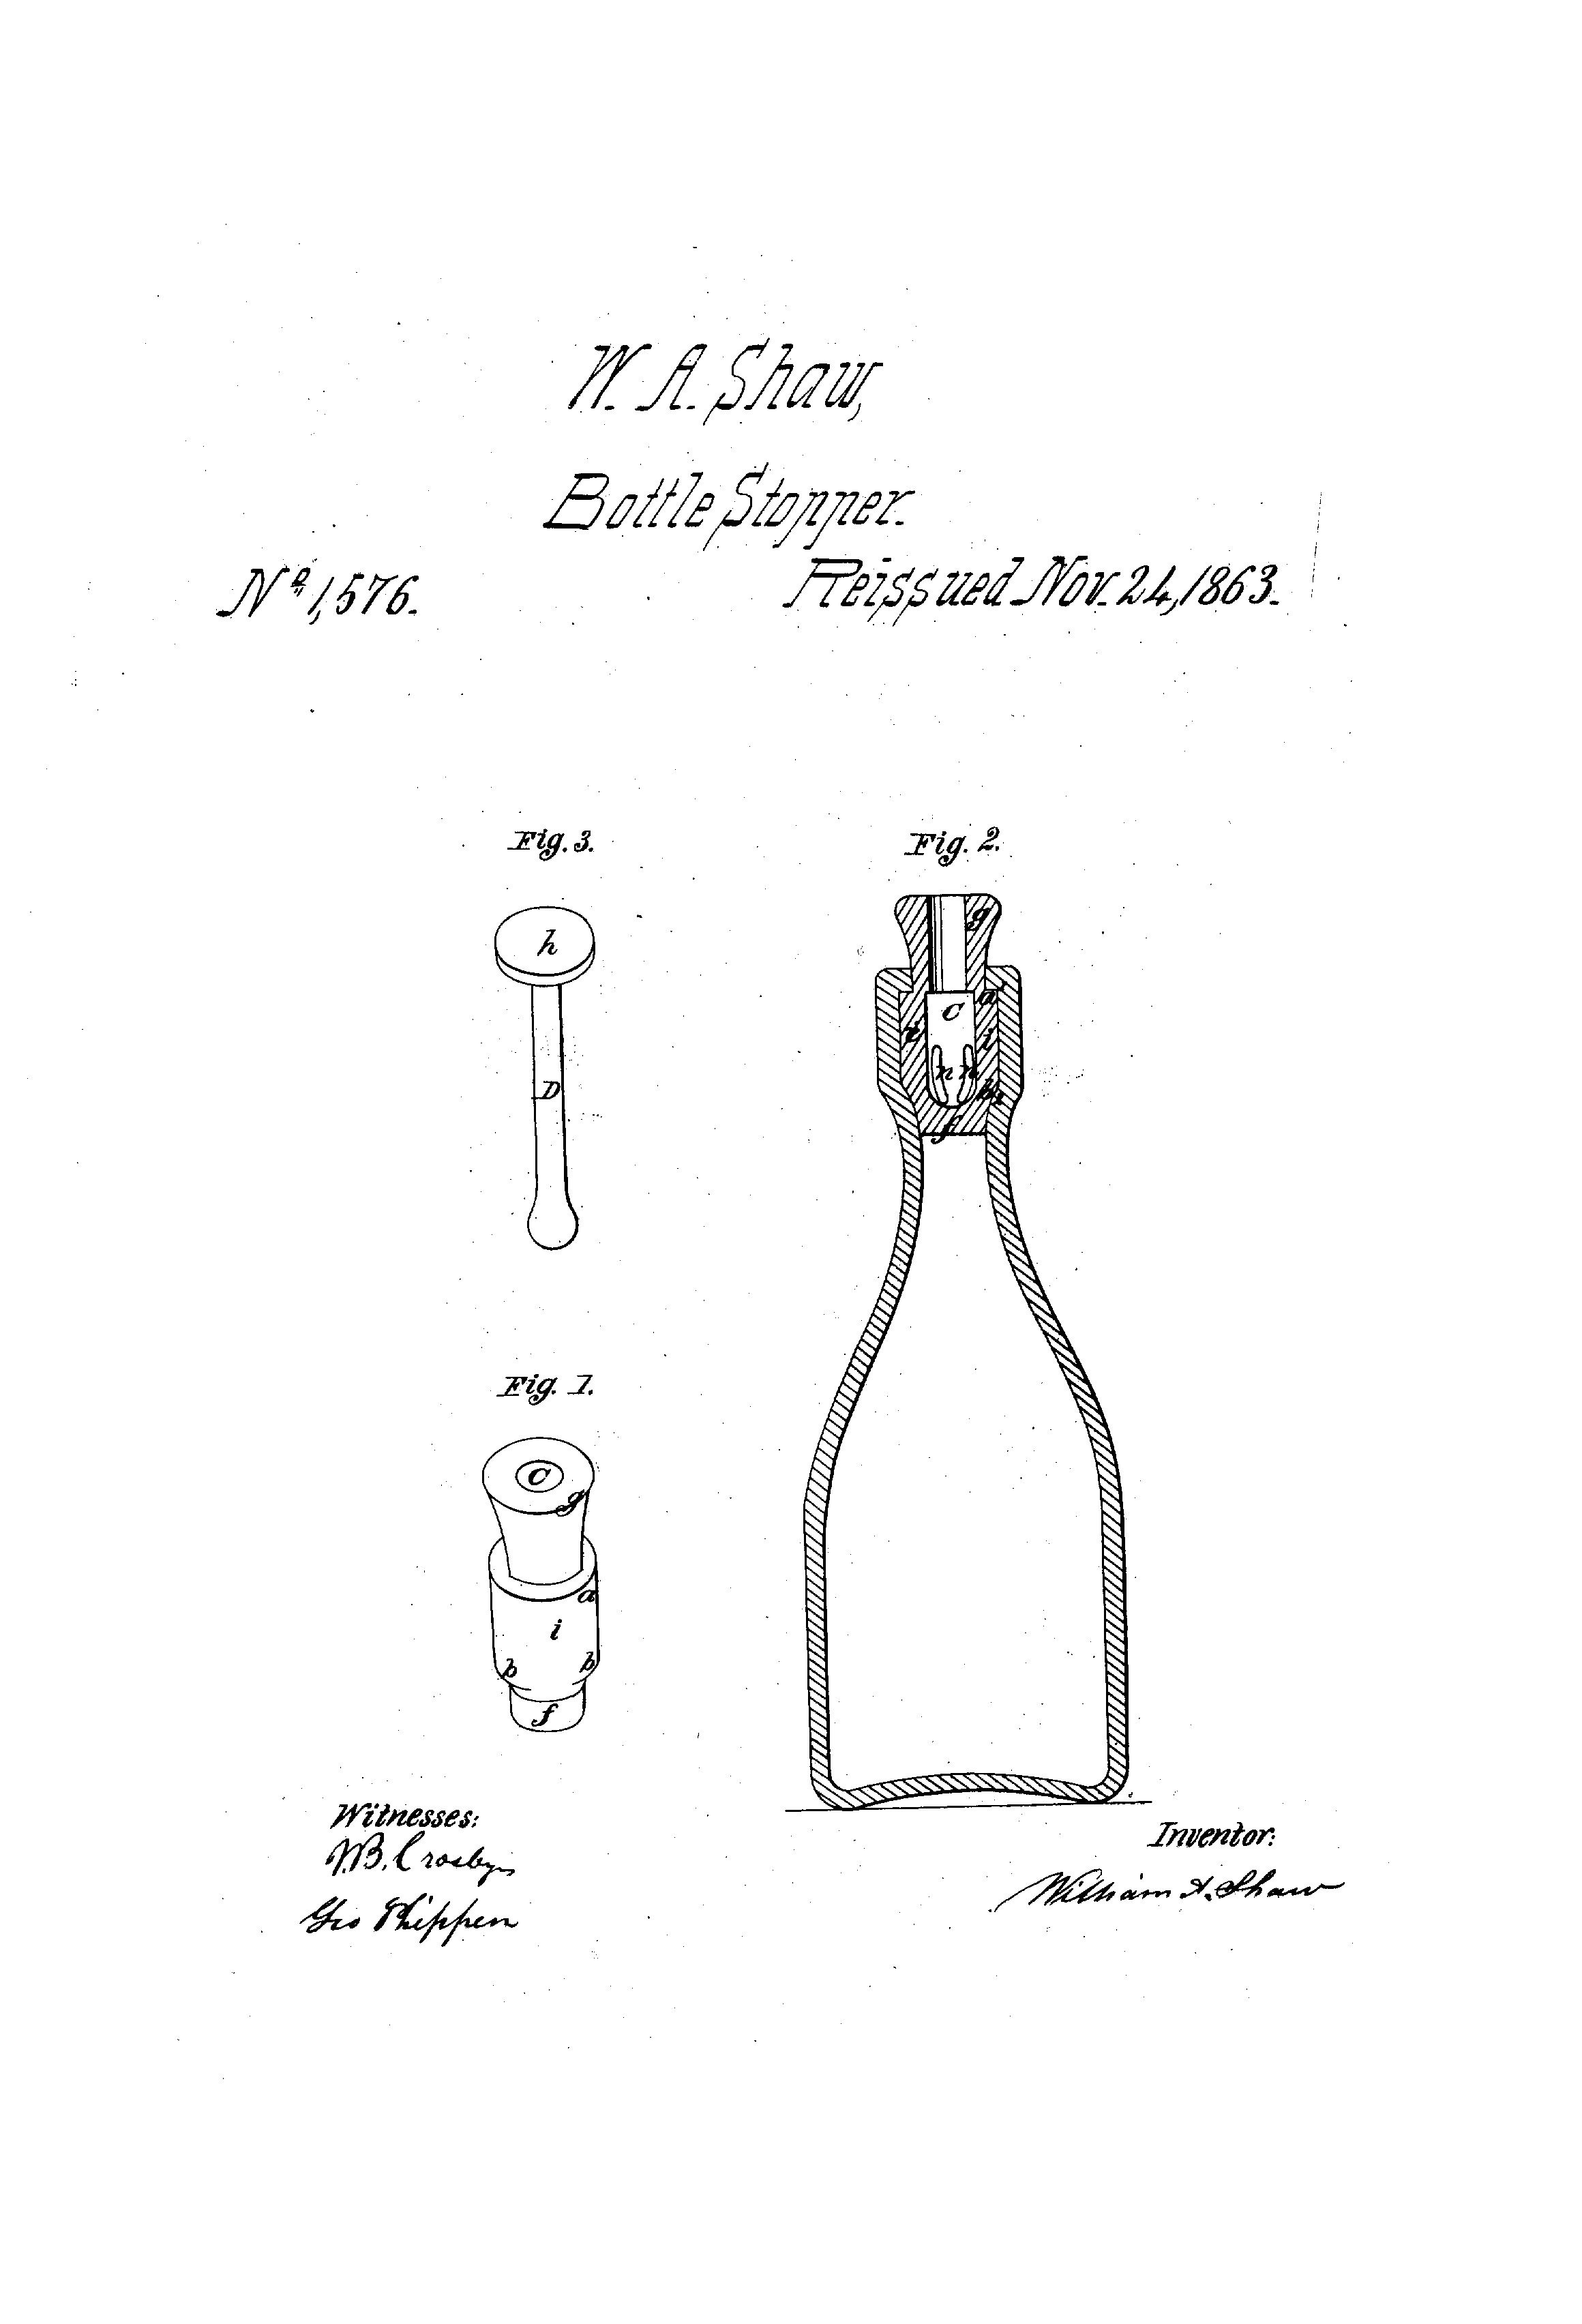 Reissued Patent 1,576